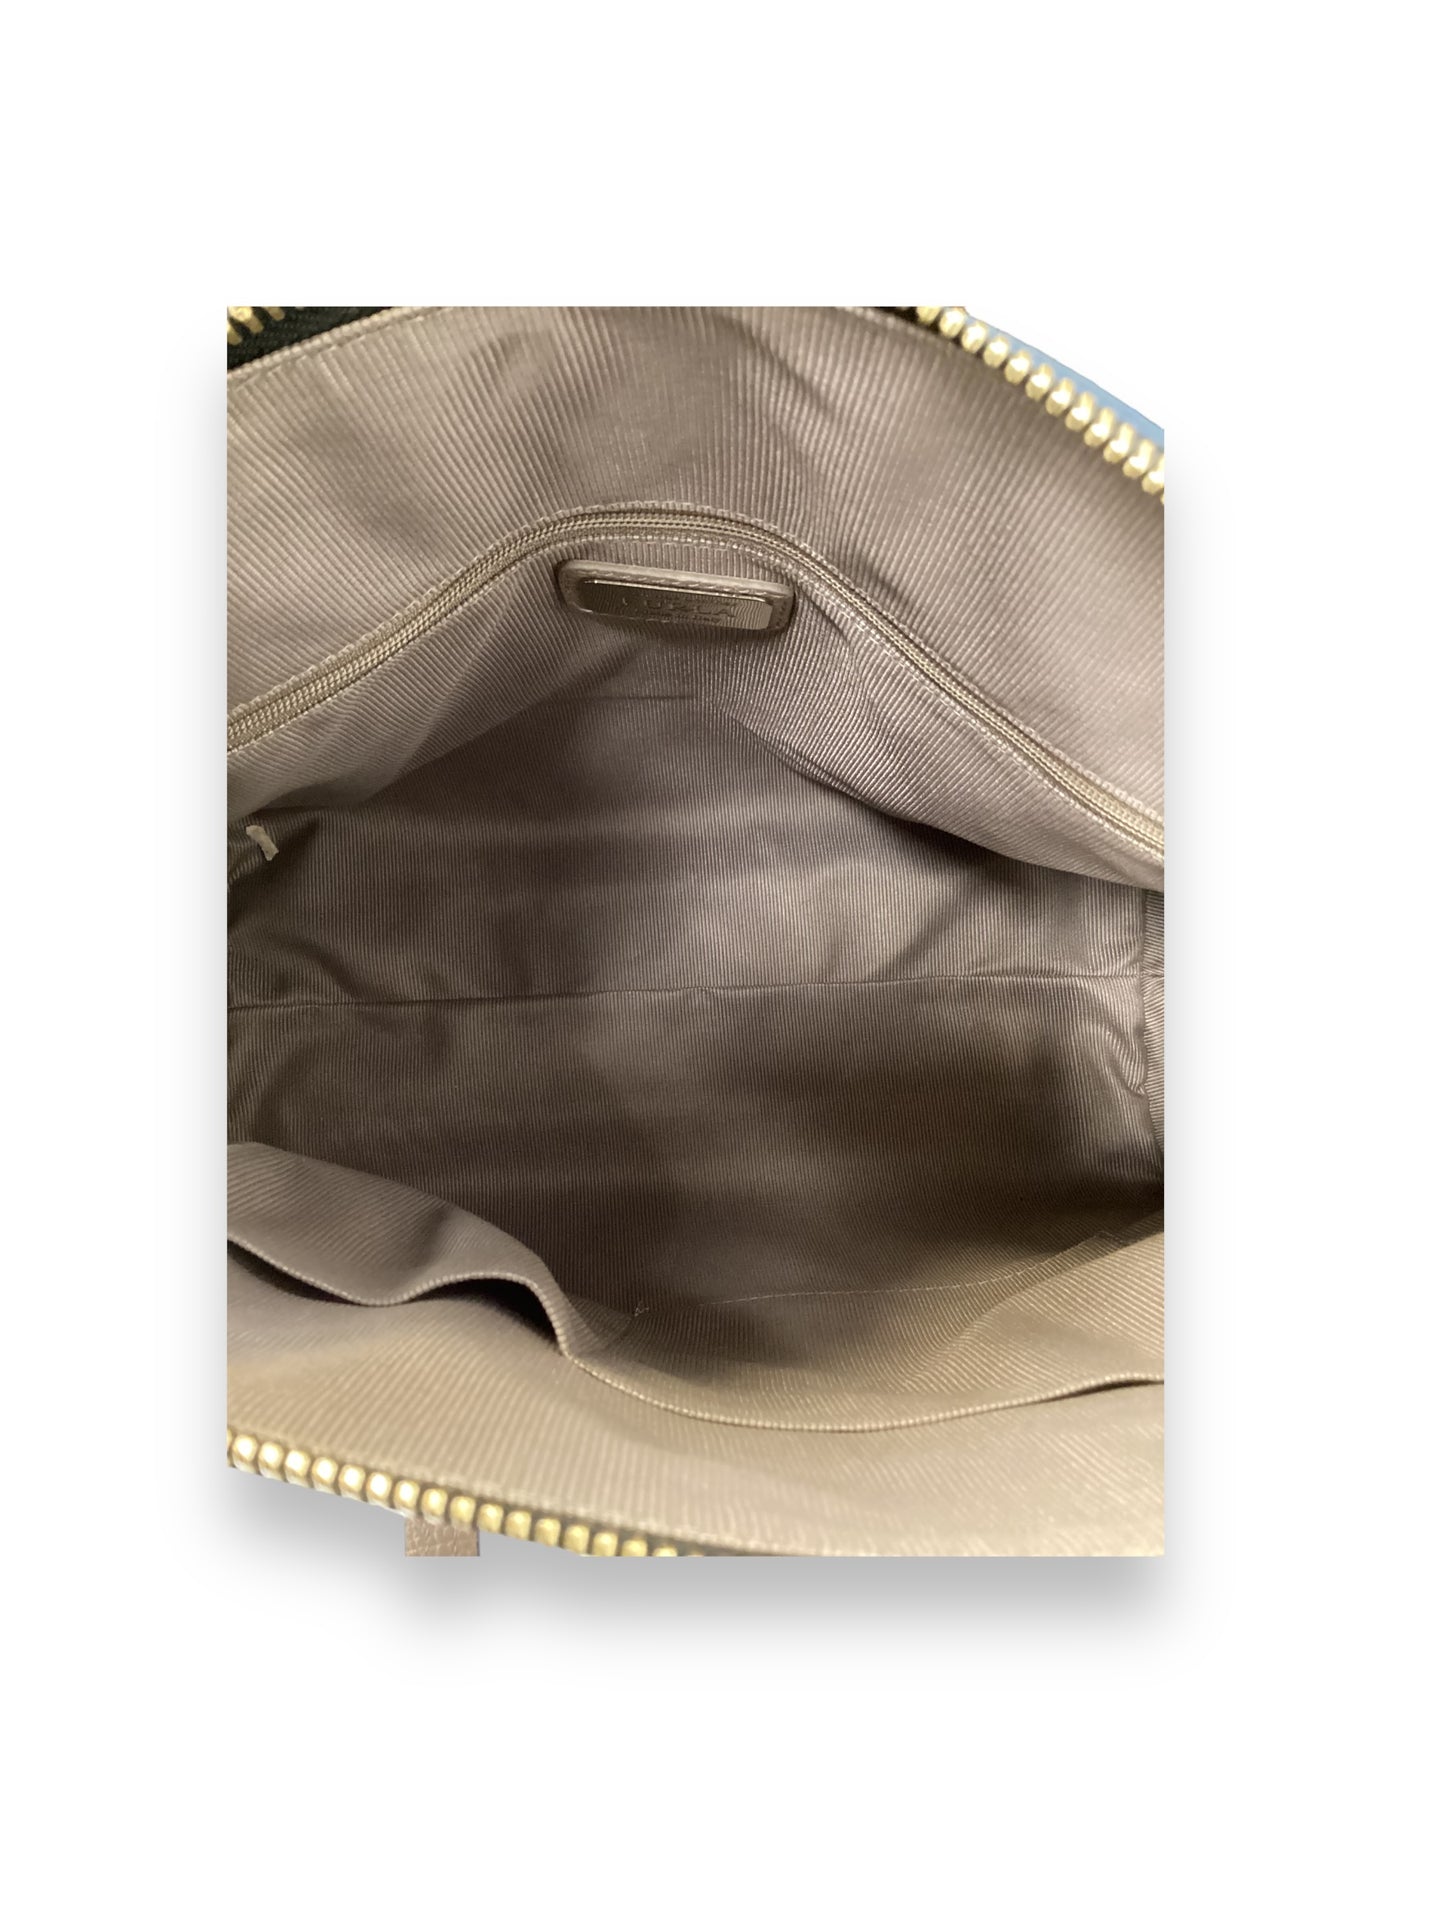 Handbag Designer By Furla  Size: Medium